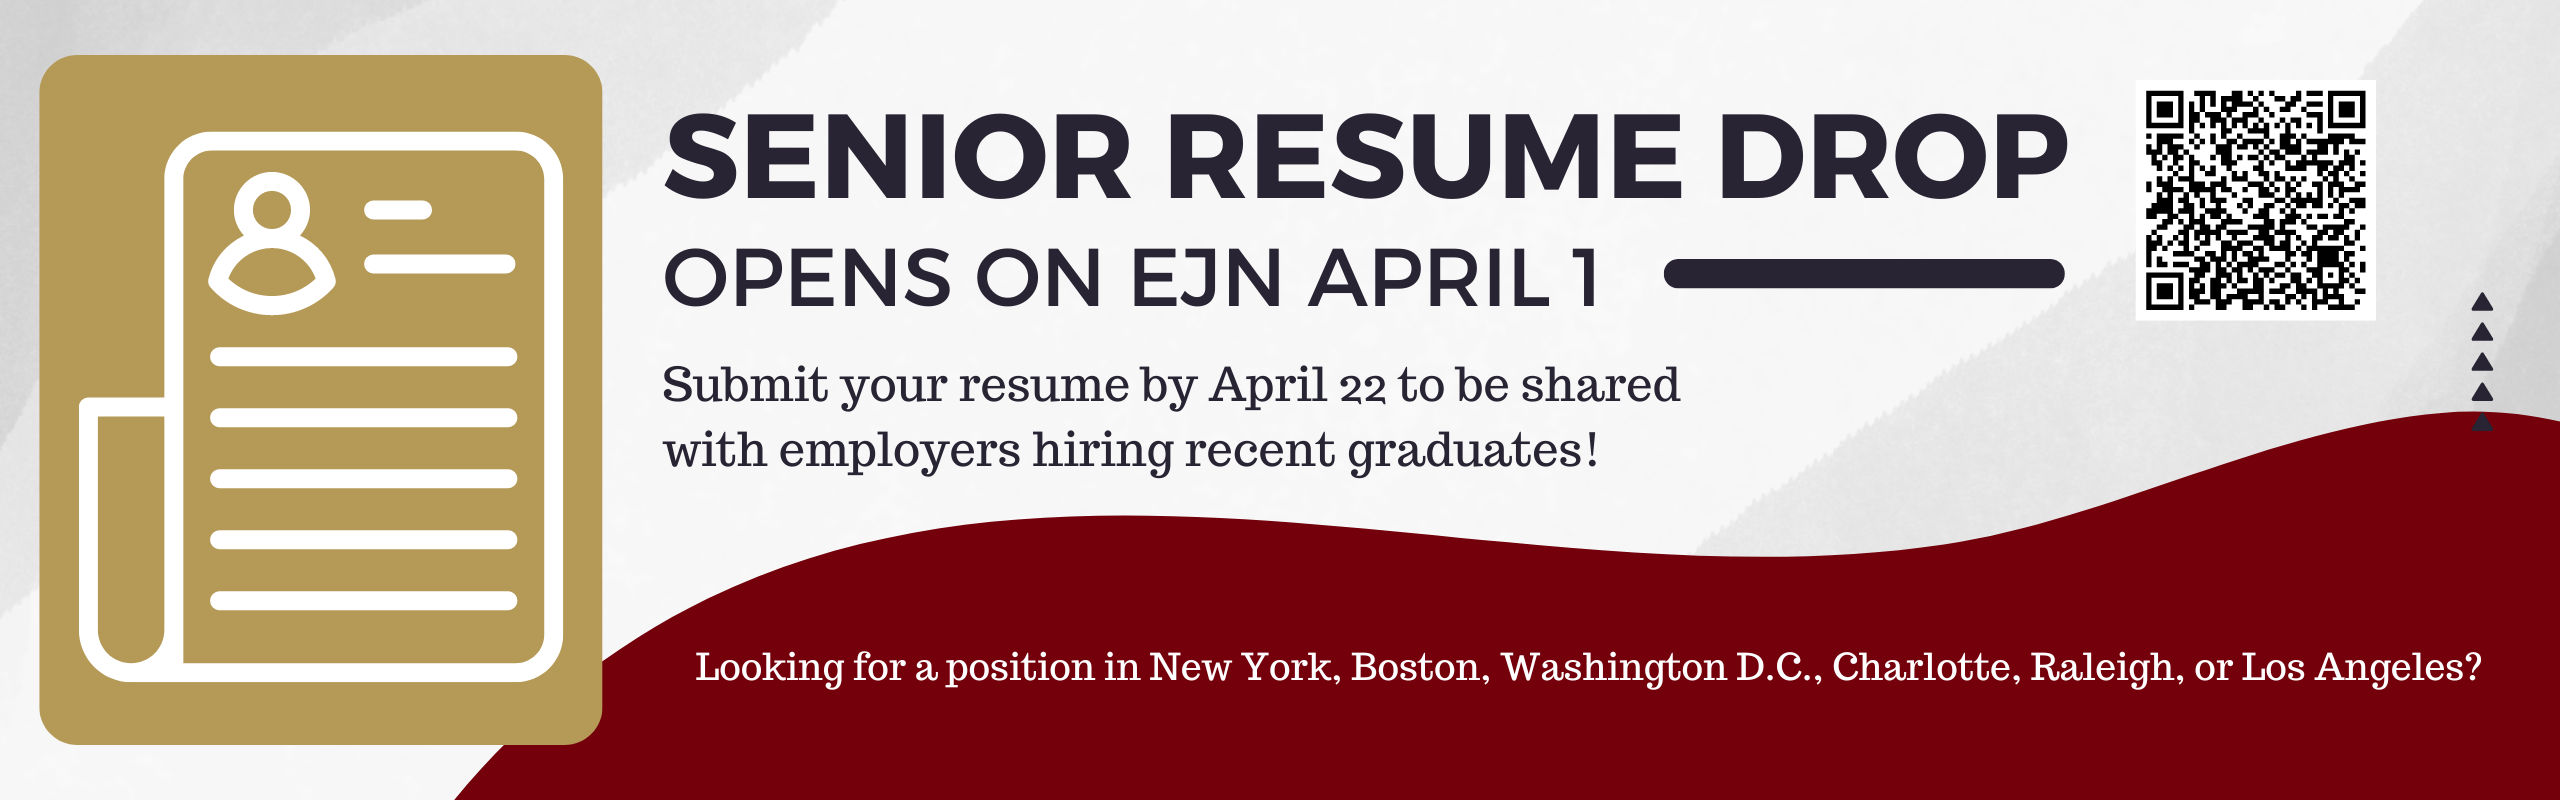 Senior Resume Drop. See EJN for more details.